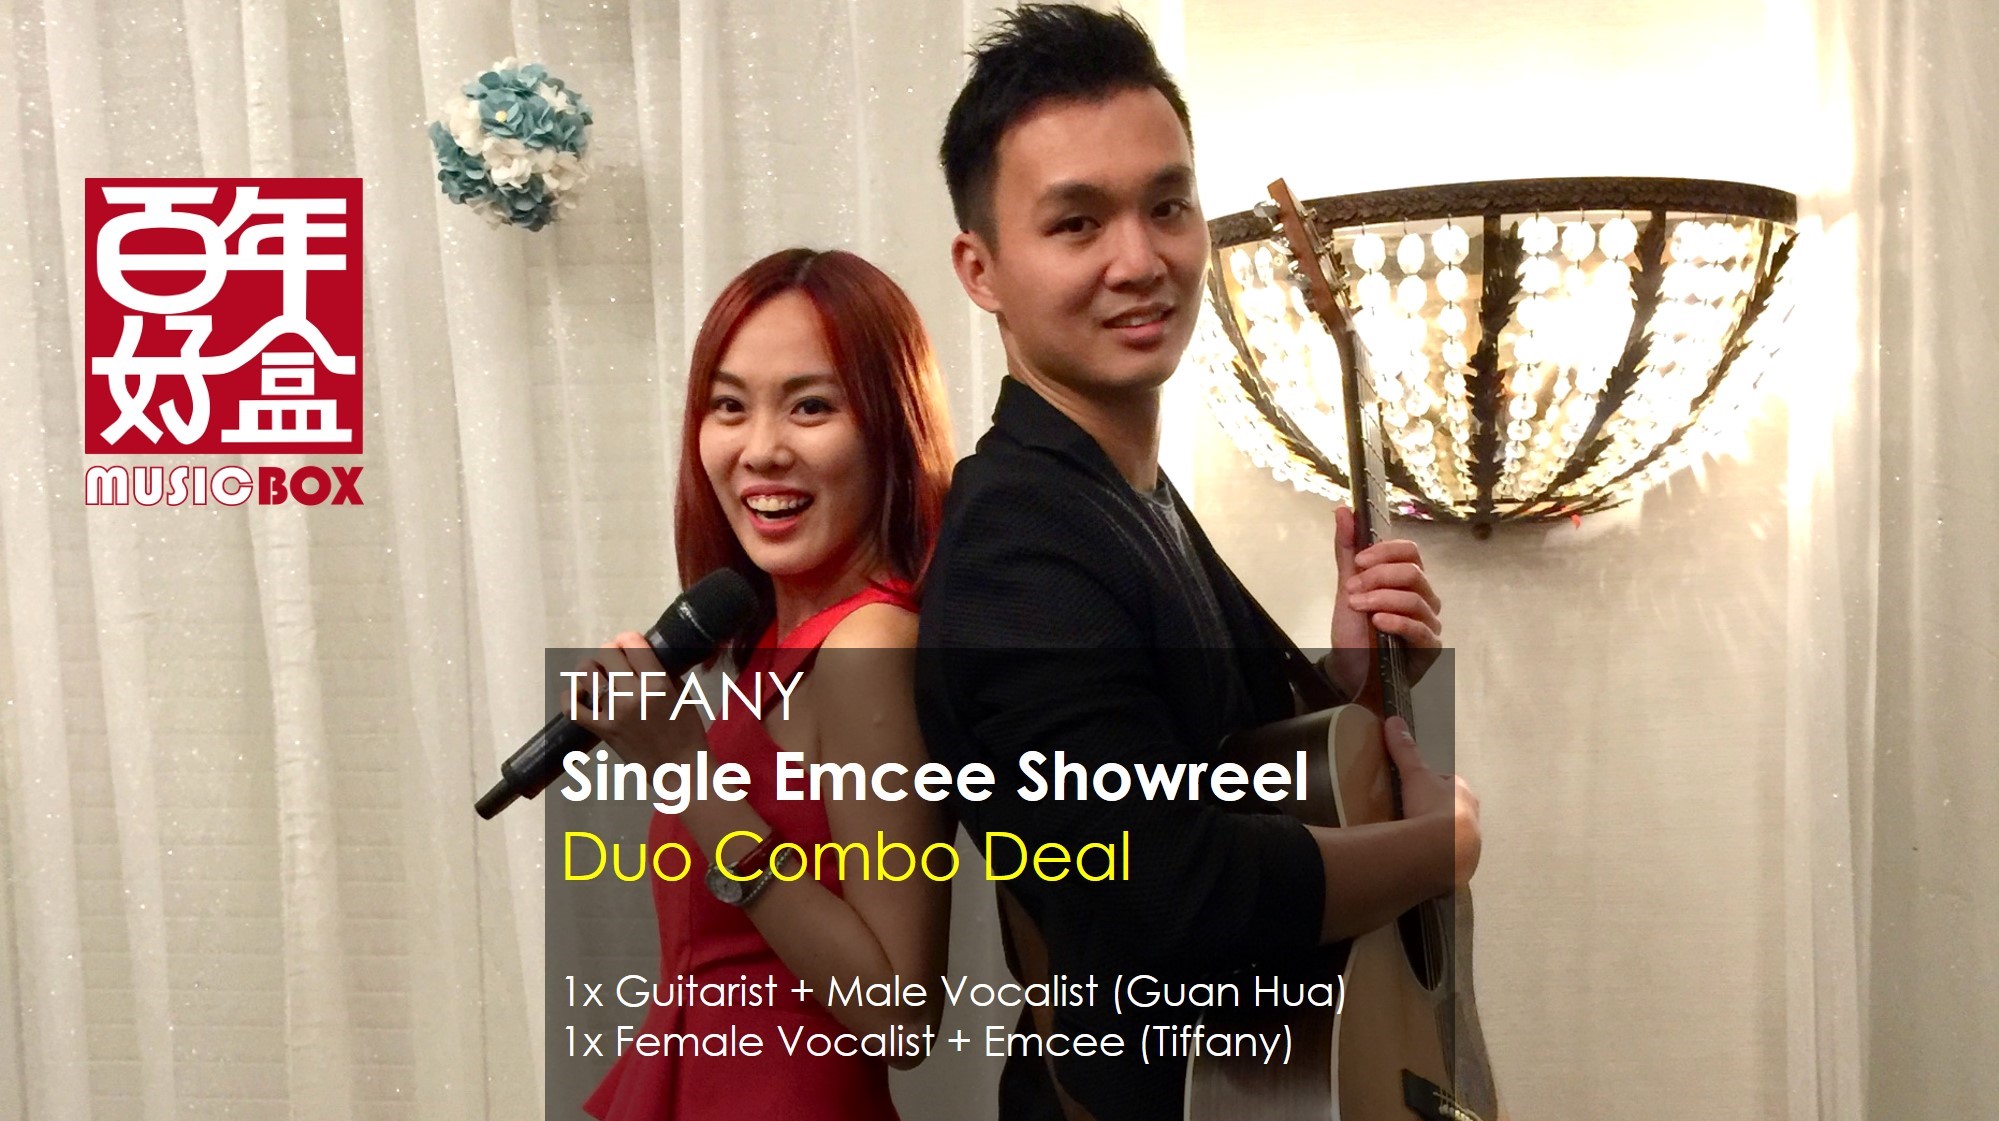 Tiffany - Wedding Emcee Showreel - Duo Combo Deal